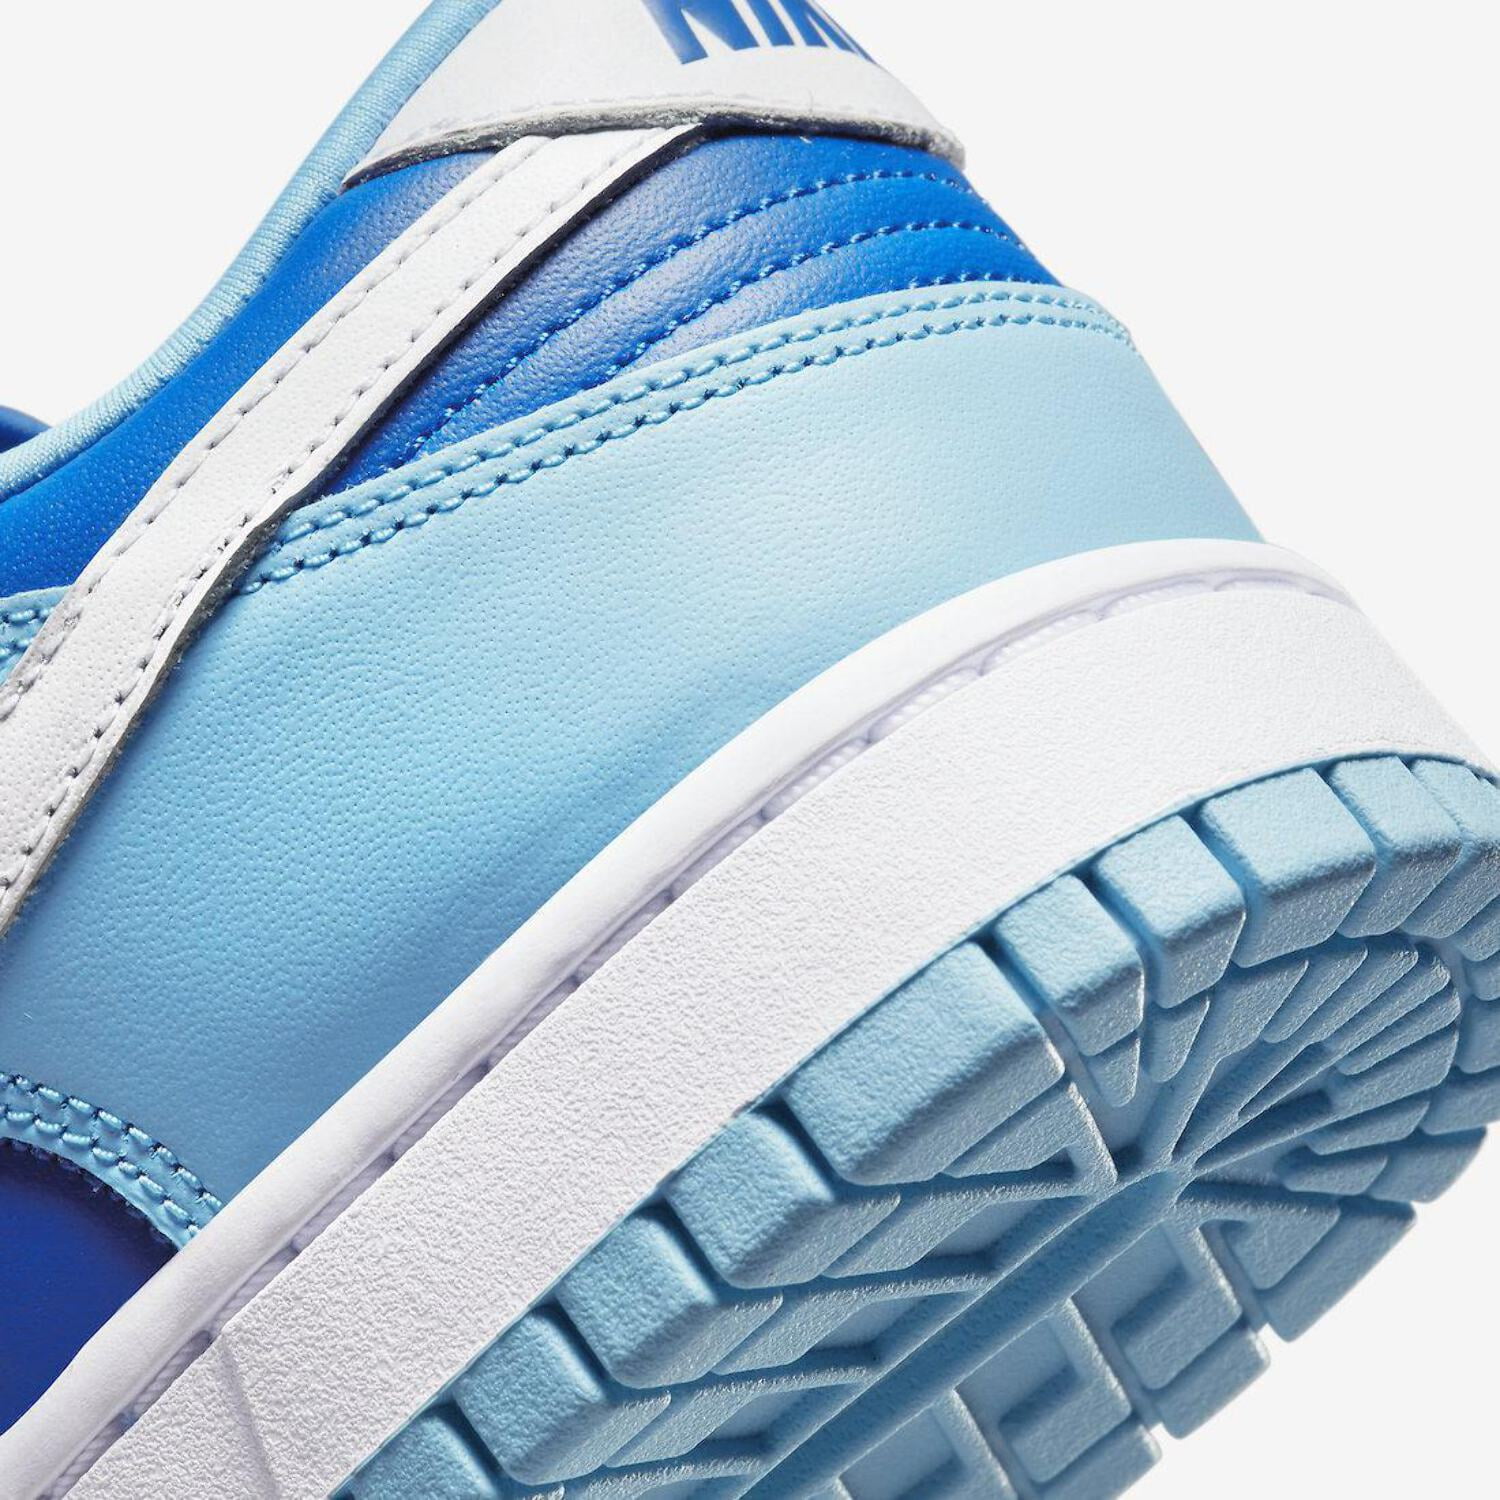 Men's) Nike Dunk Low Retro QS 'Argon Blue' 2022 - Walmart.com